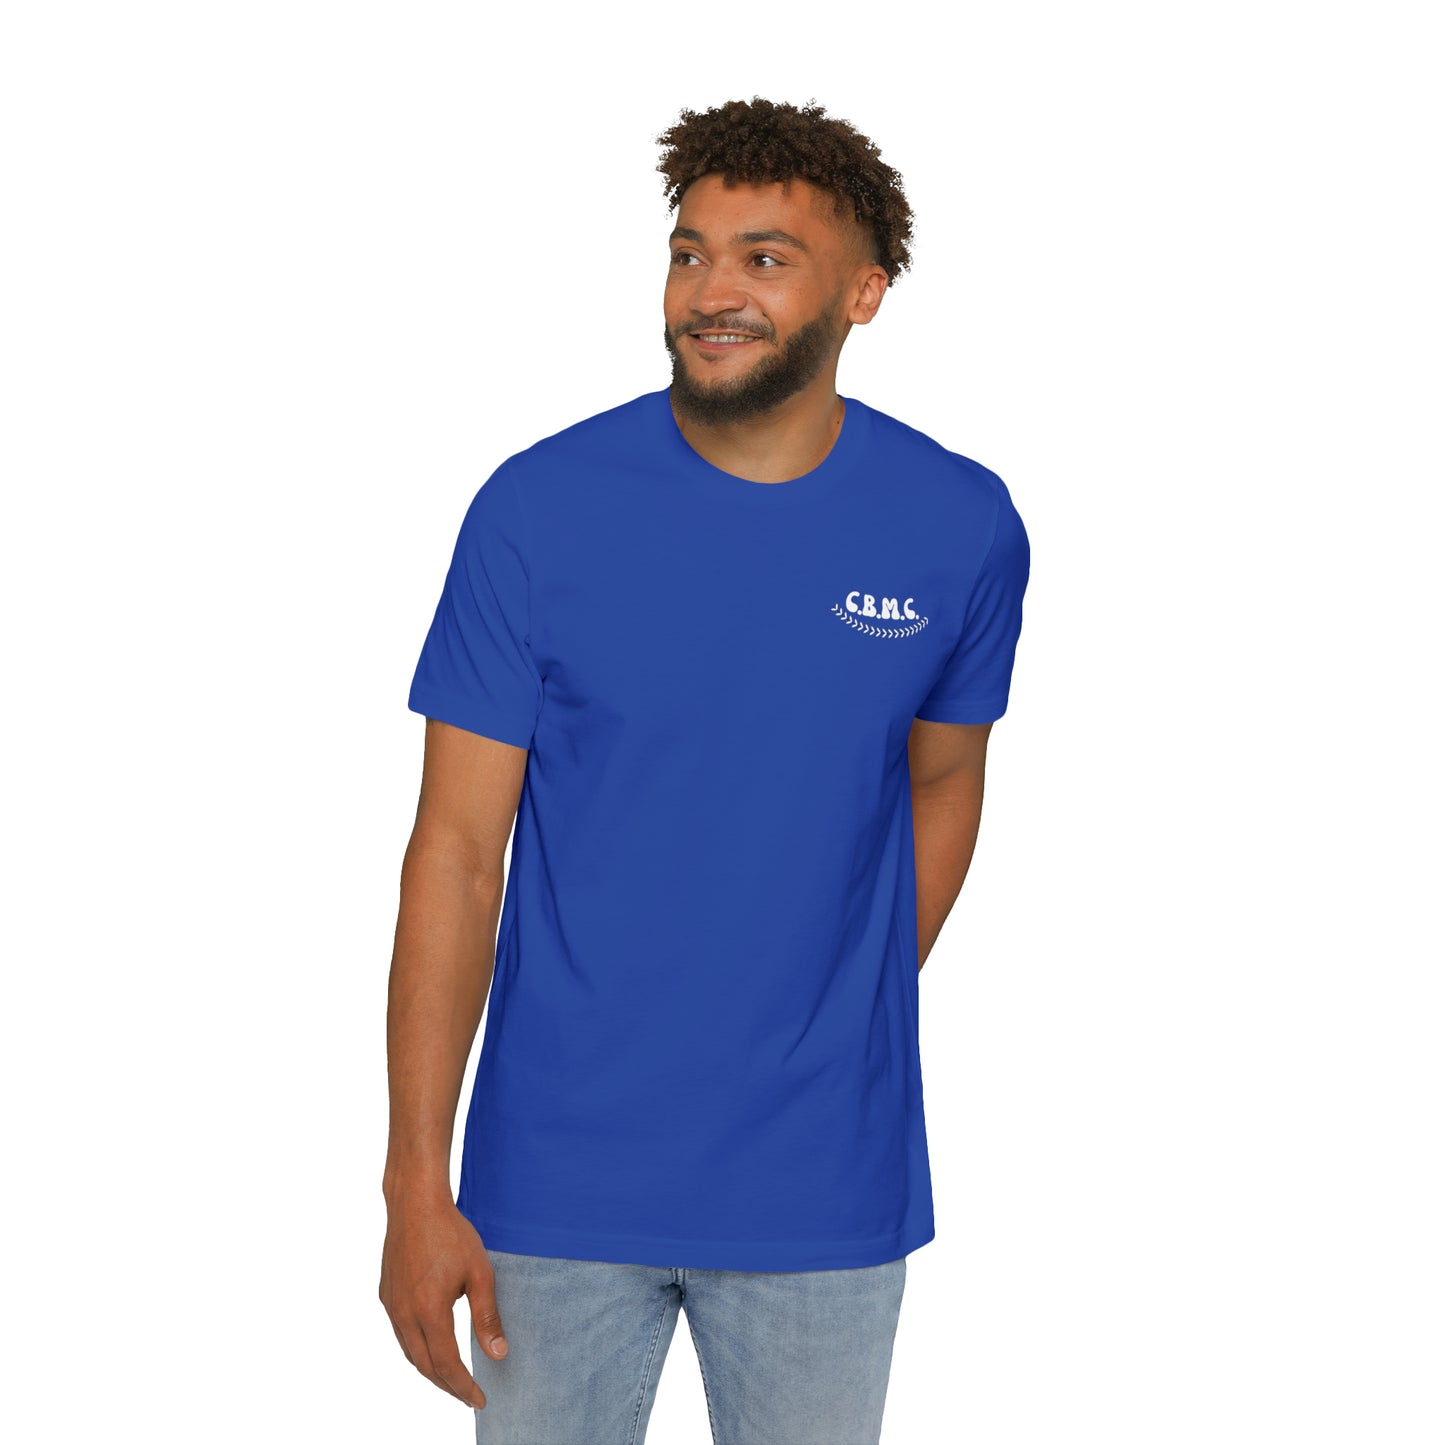 Cool Baseball Moms Club, Front & Back - Unisex Short-Sleeve Jersey T-Shirt